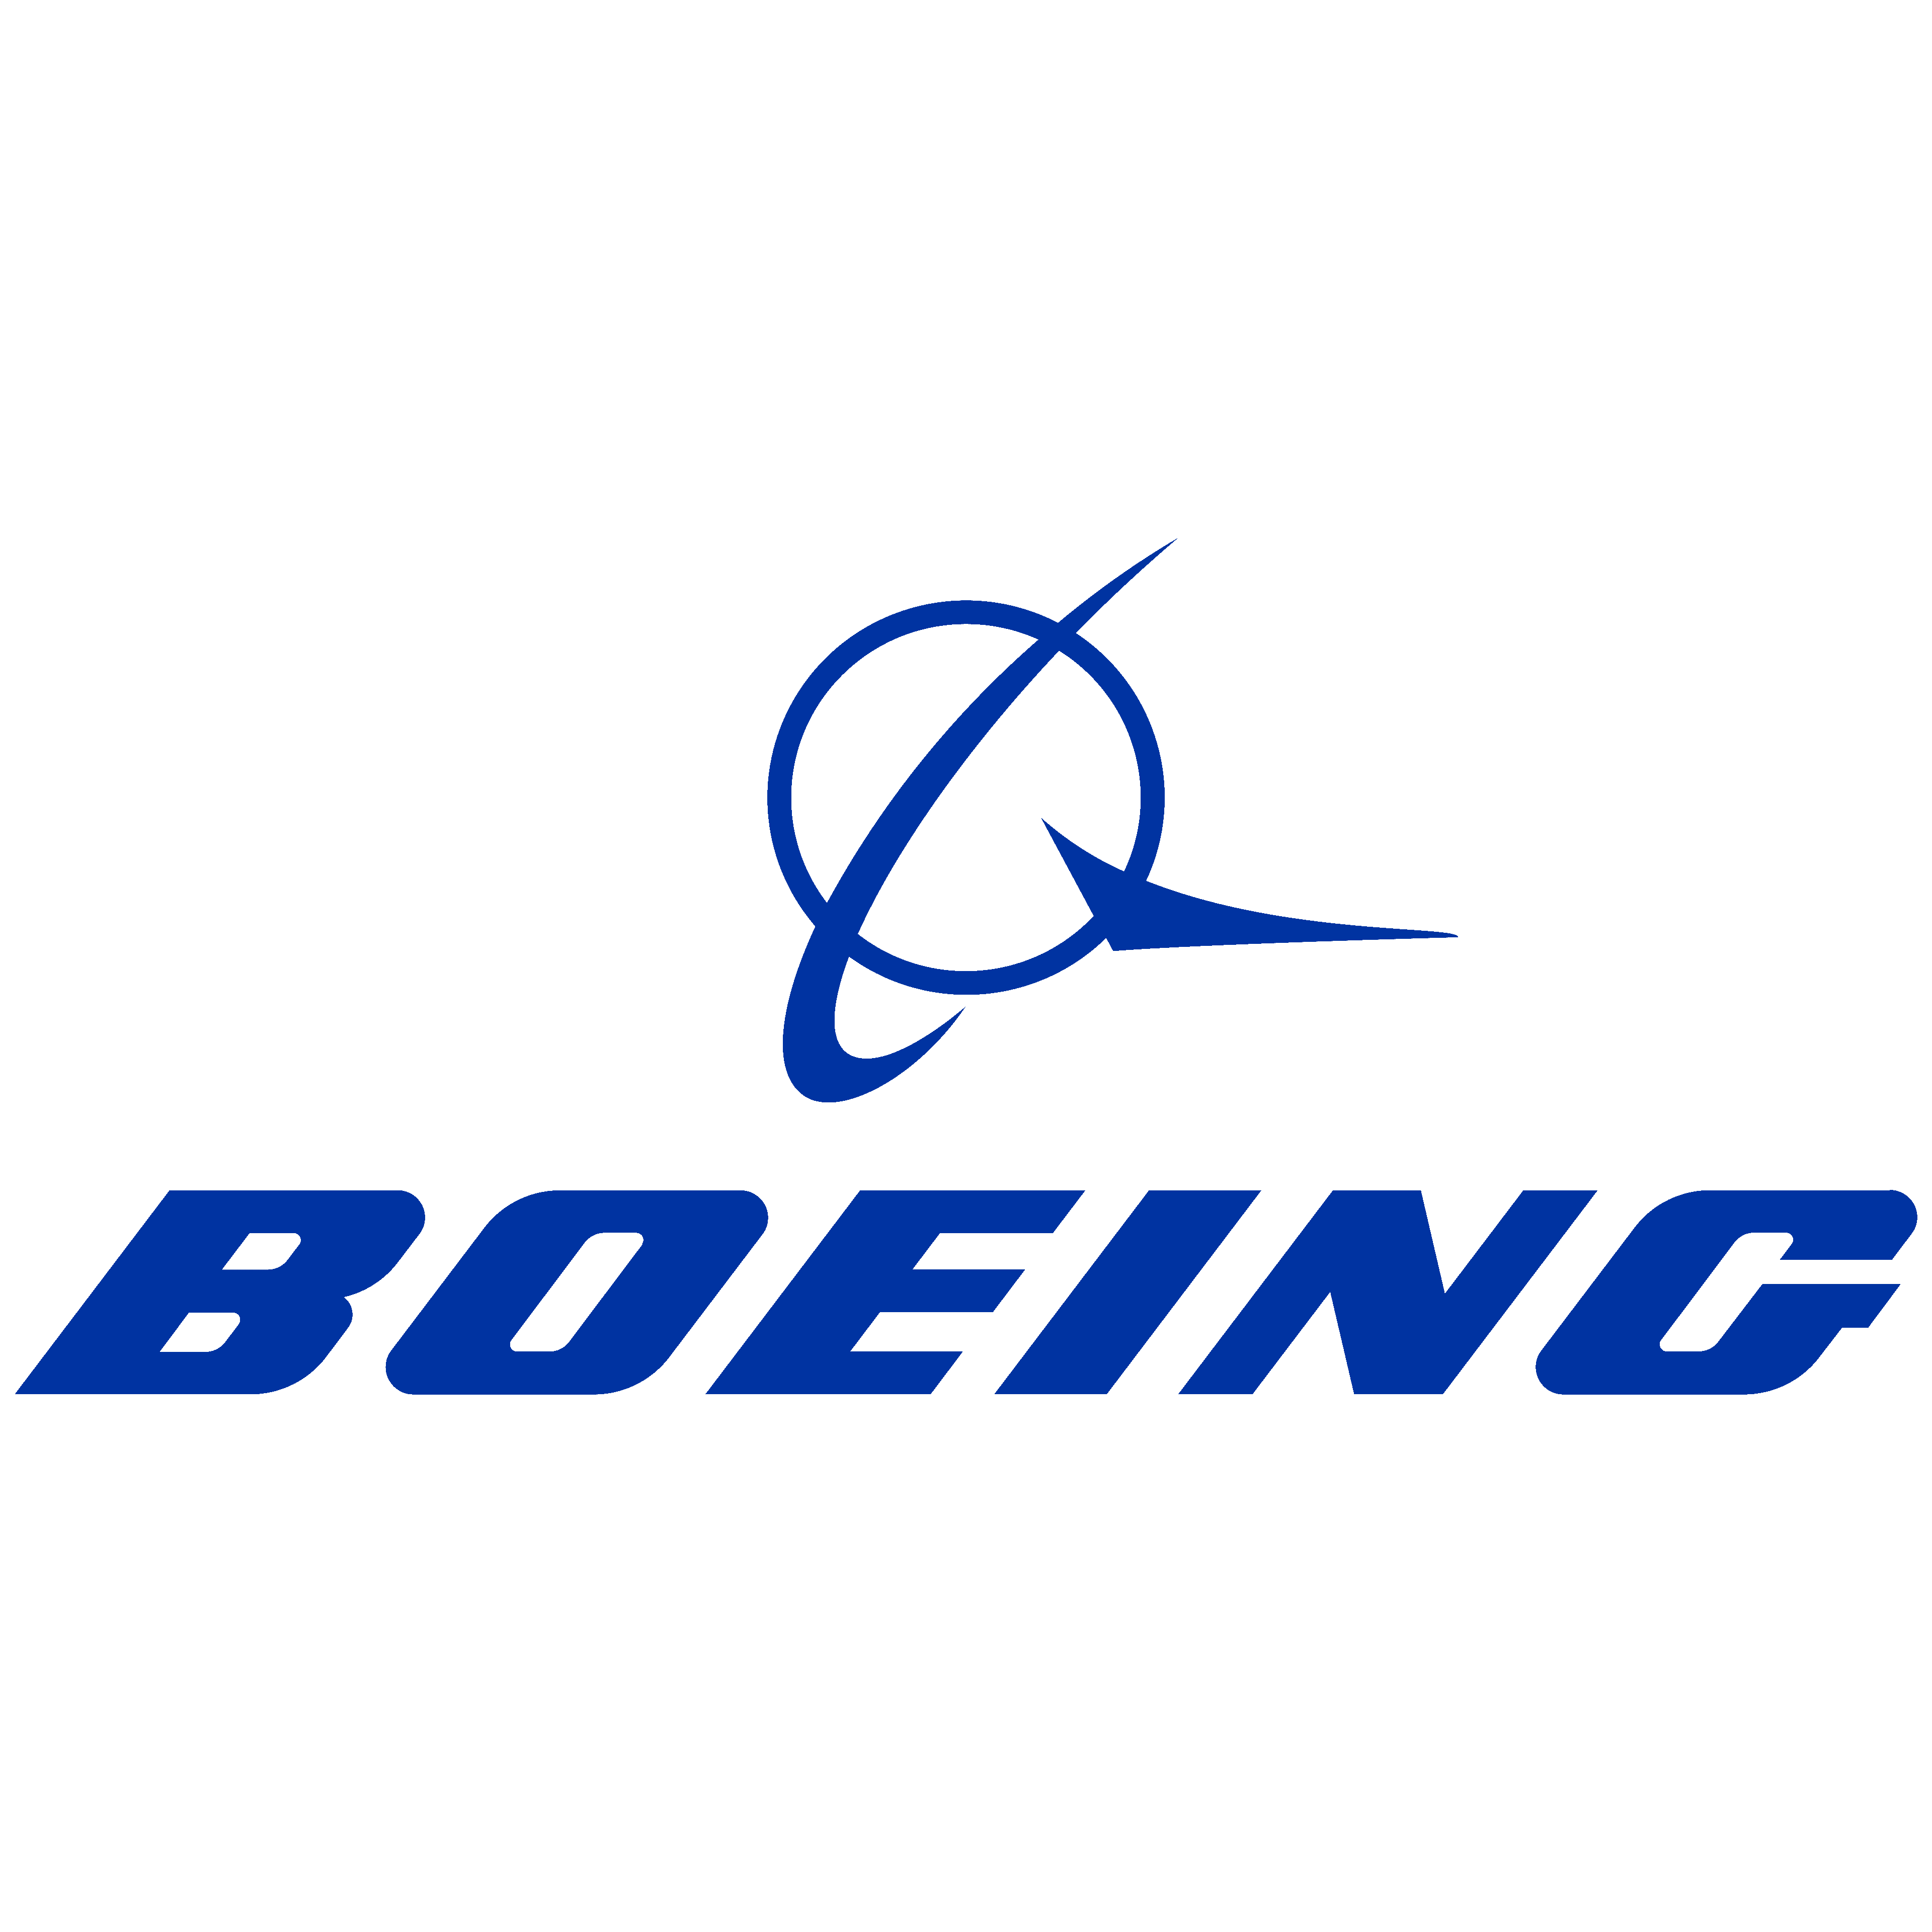 Boeing_Logo